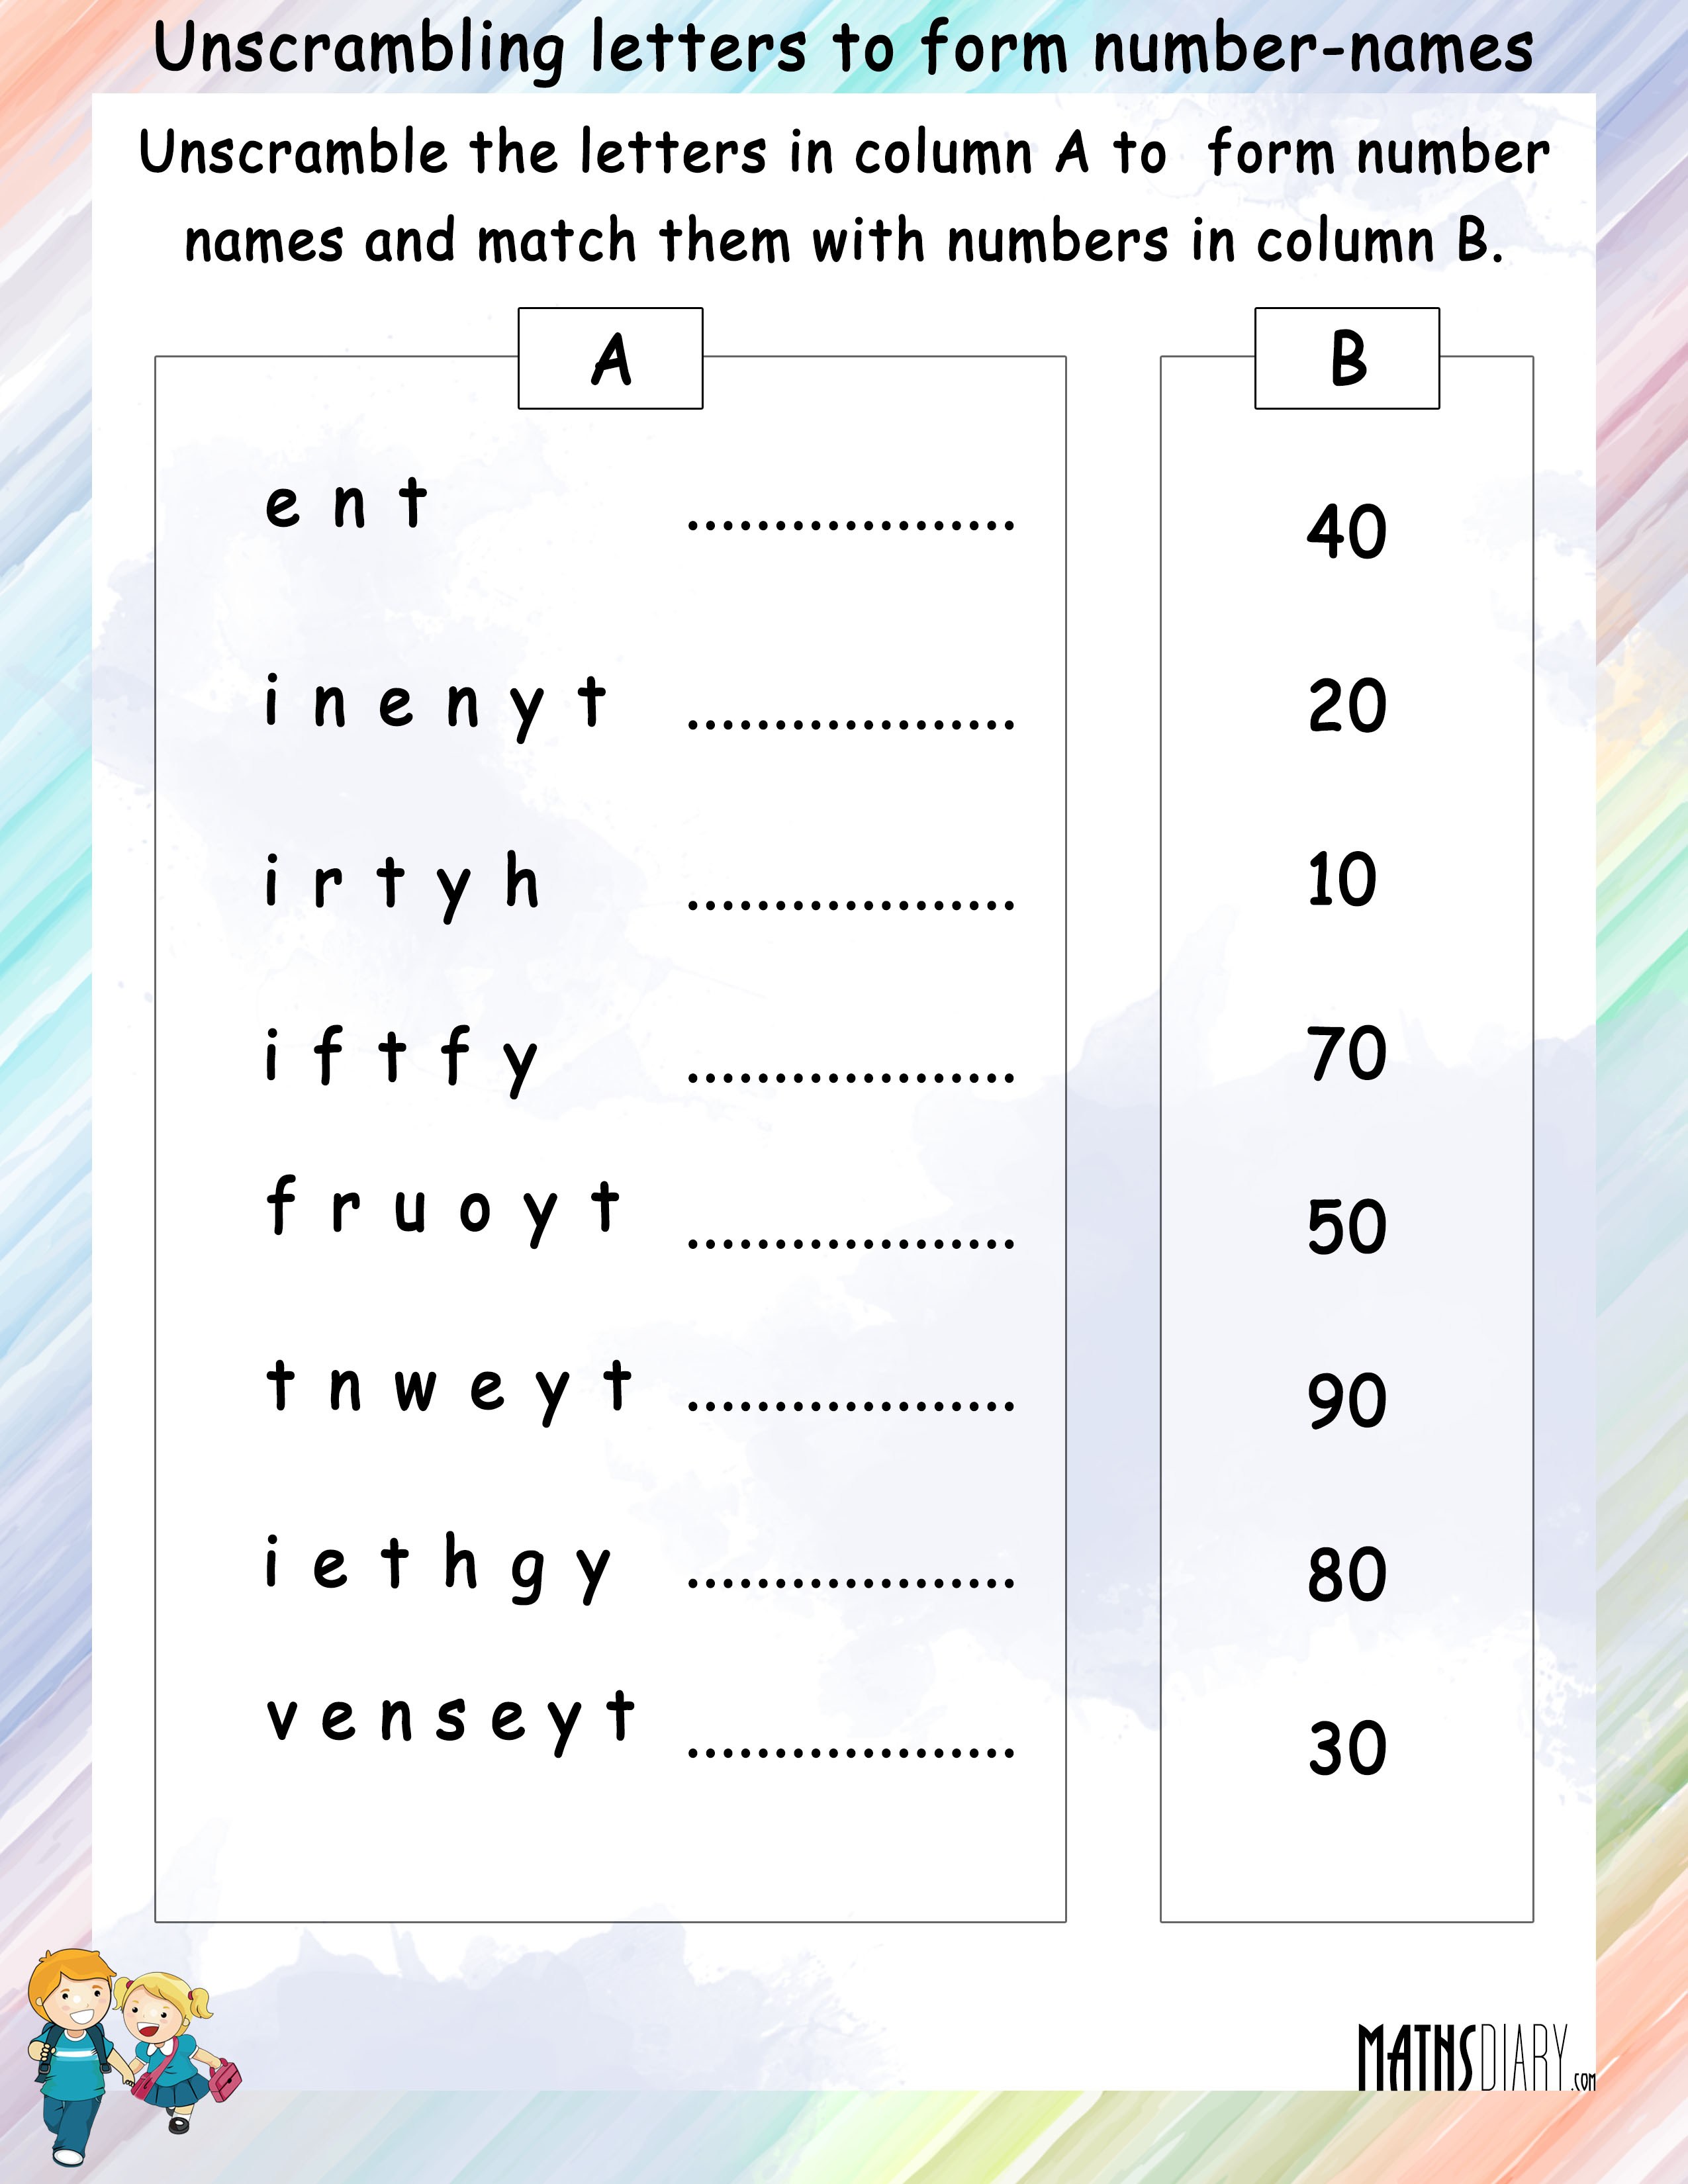 naming-numbers-grade-1-math-worksheets-page-2-matching-number-name-to-numbers-1-10-worksheet